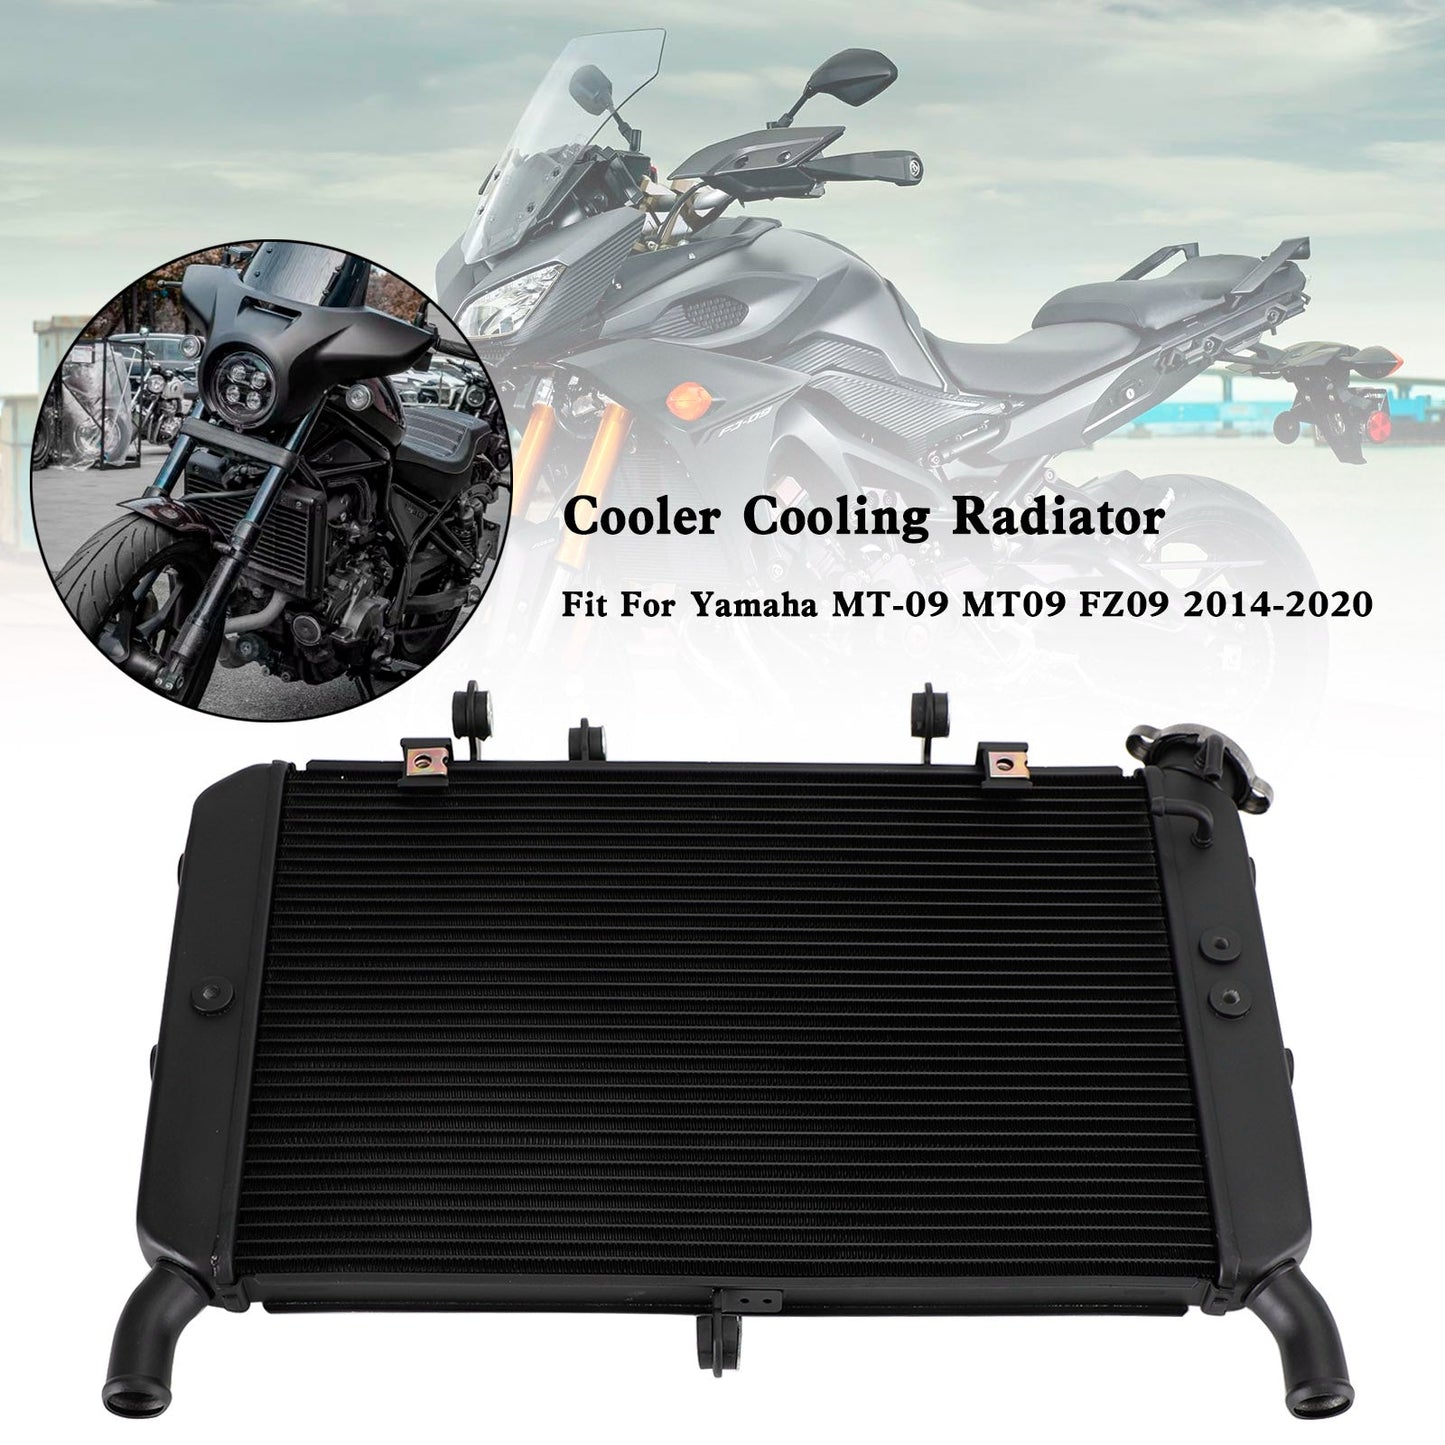 2014-2020 Yamaha MT-09 MT09 FZ09 Radiator Cooler Cooling